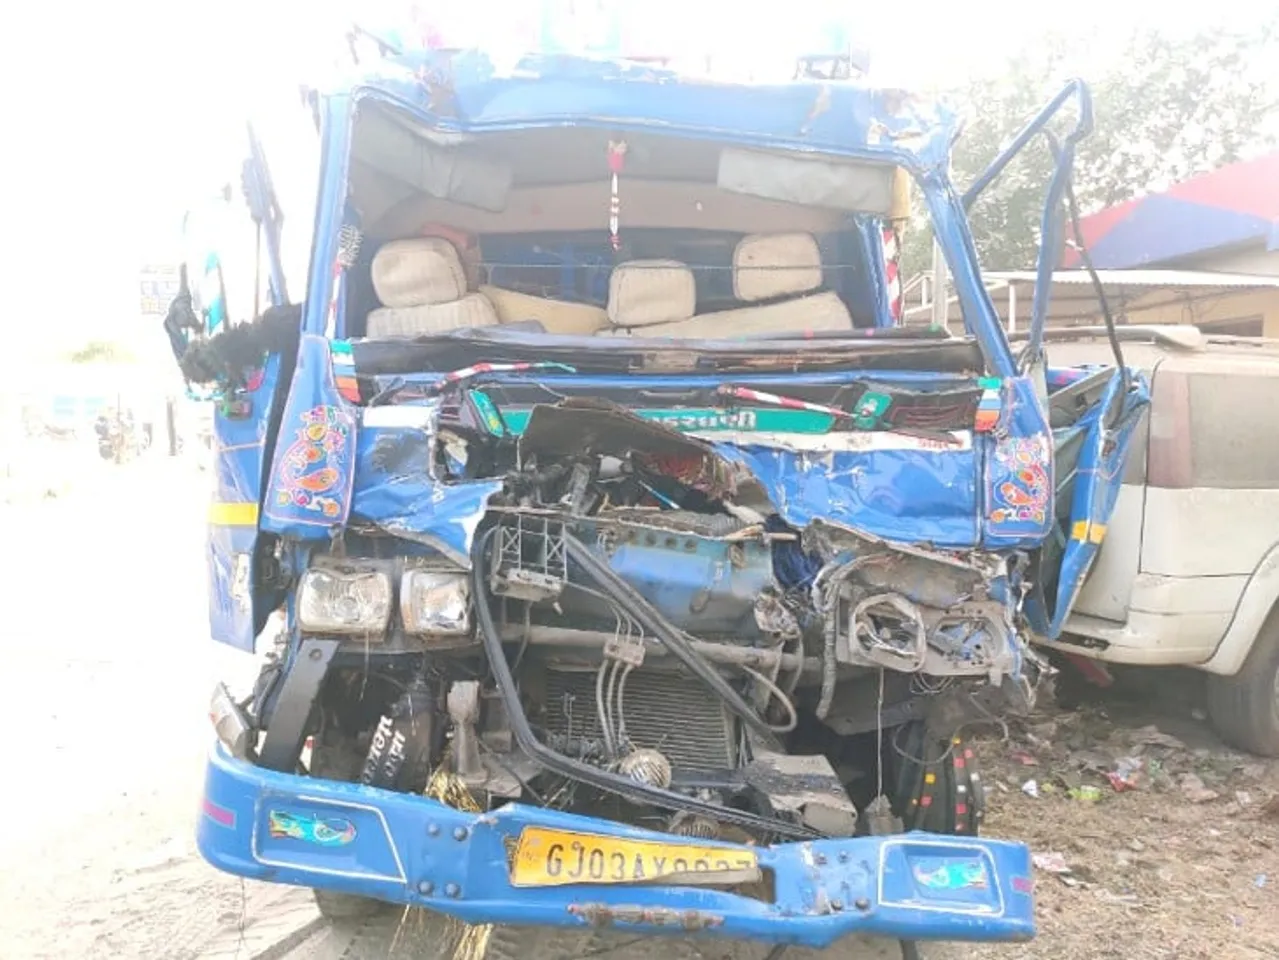 Gujarat: 11 killed, 15 injured in truck accident near Vadodara